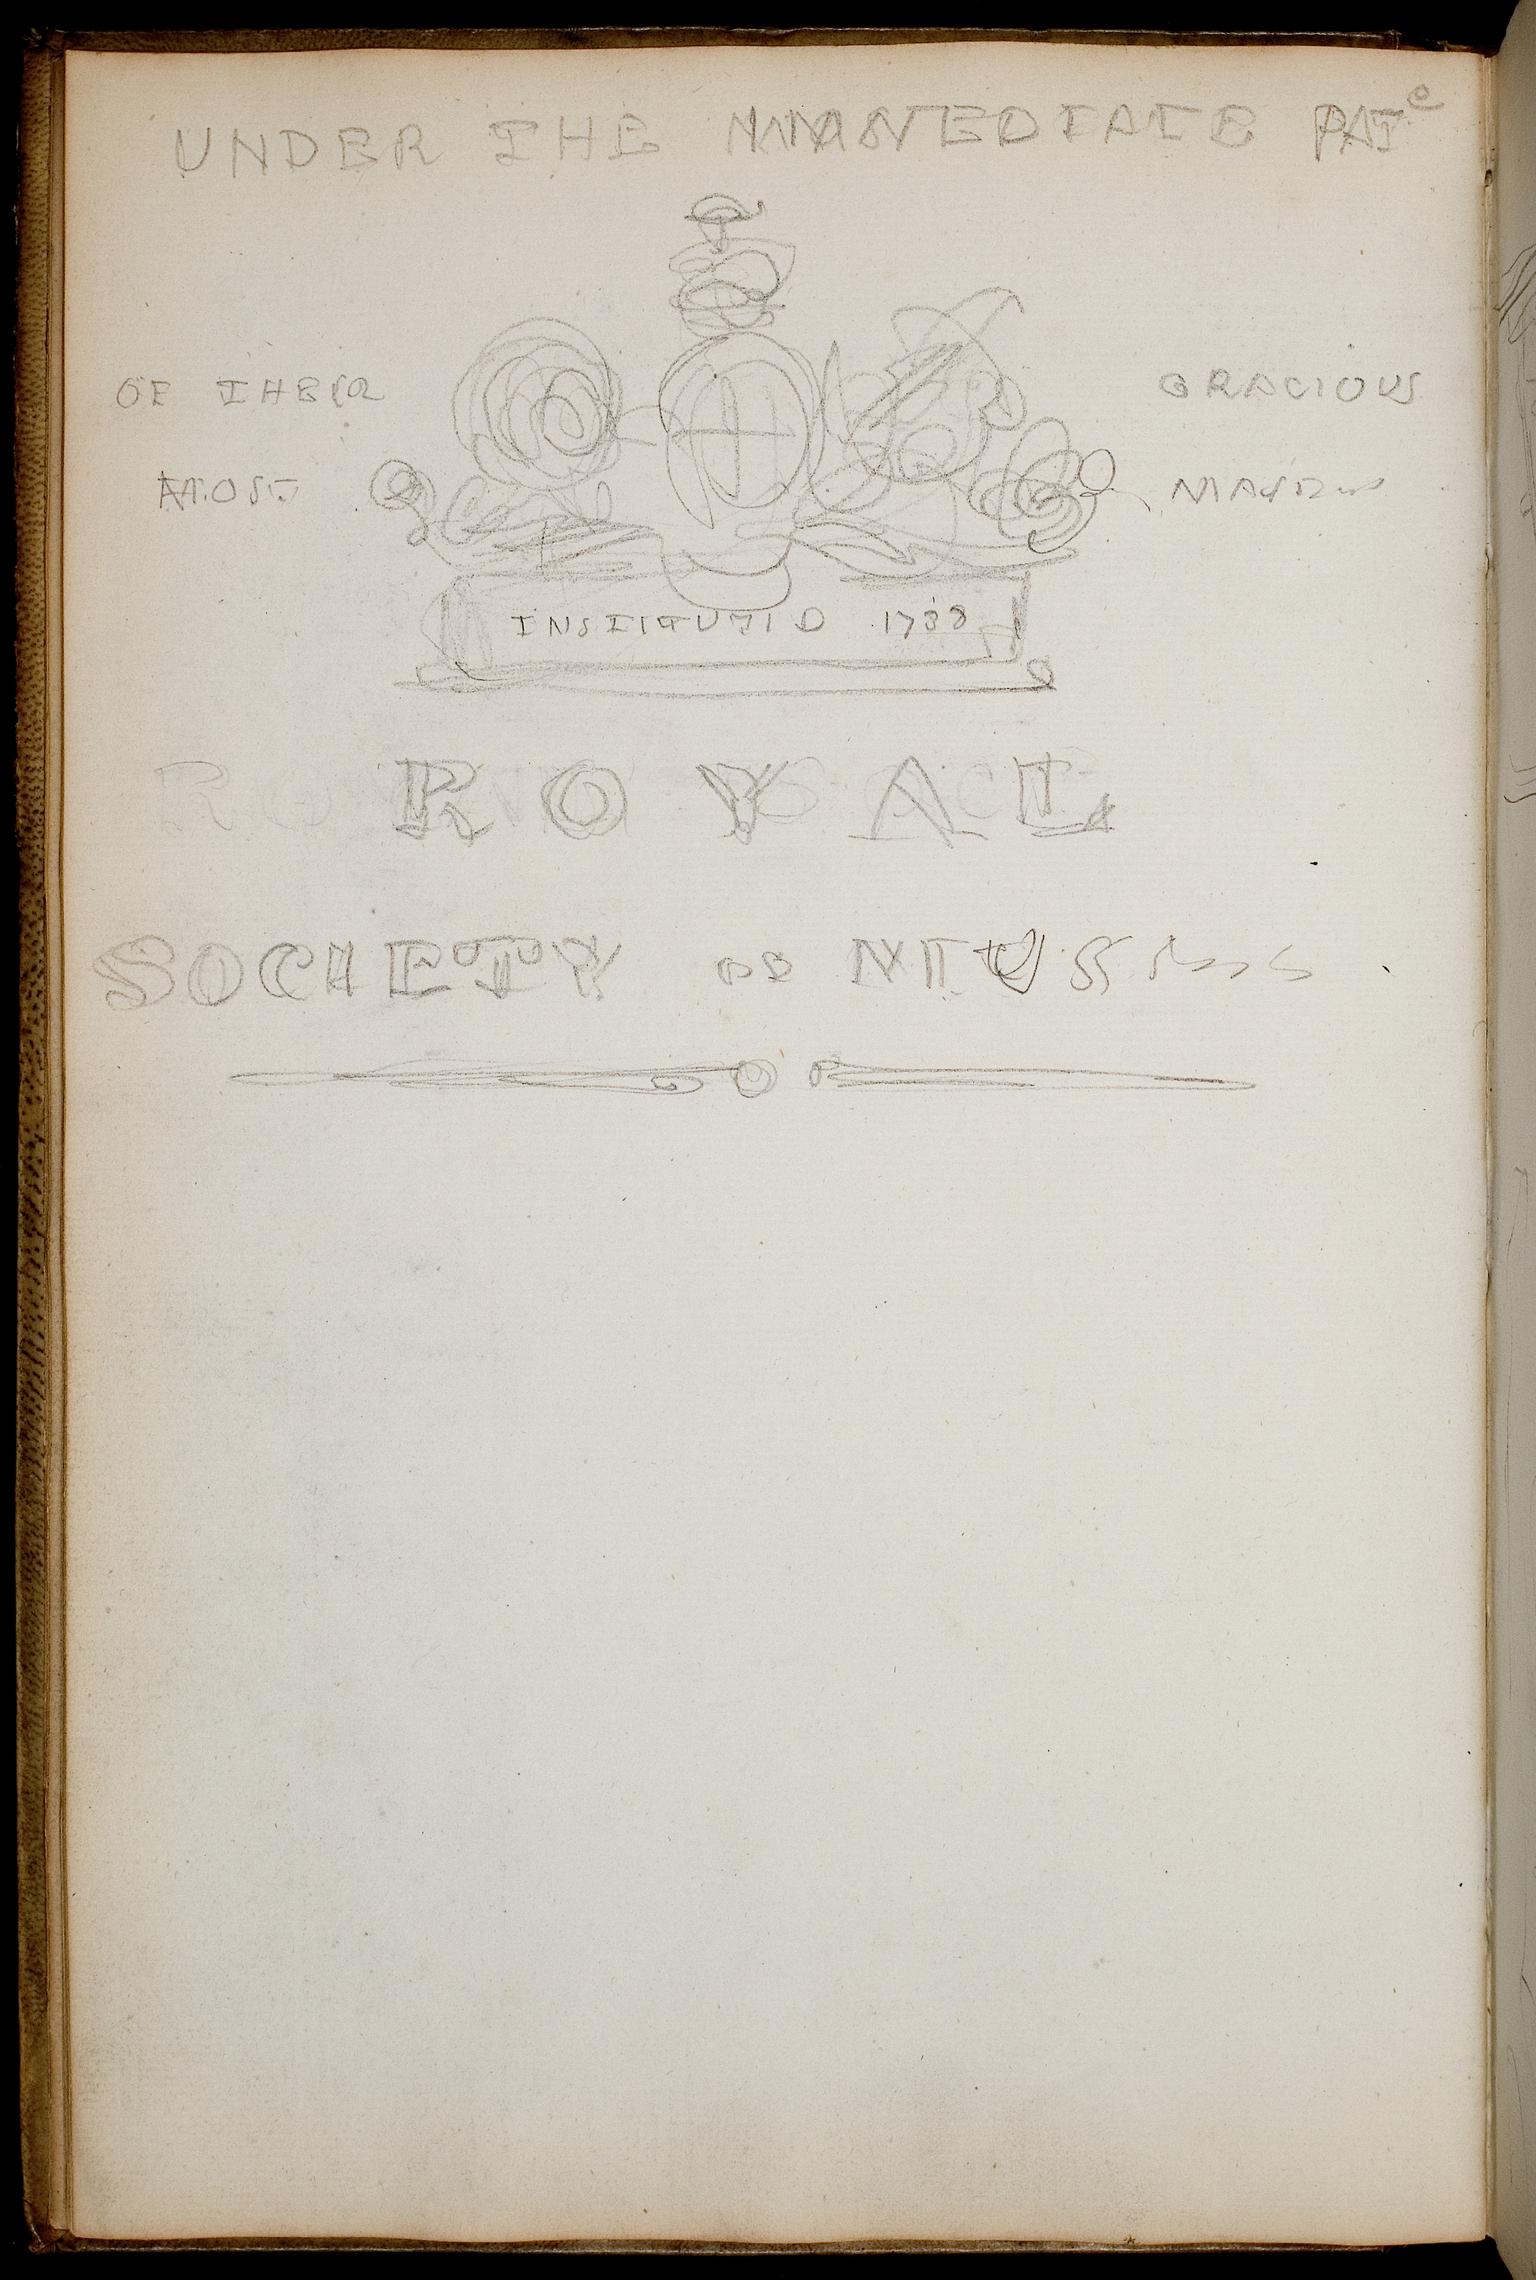 Sketchbook: Sketches by J.Parry Jun'r, 1830